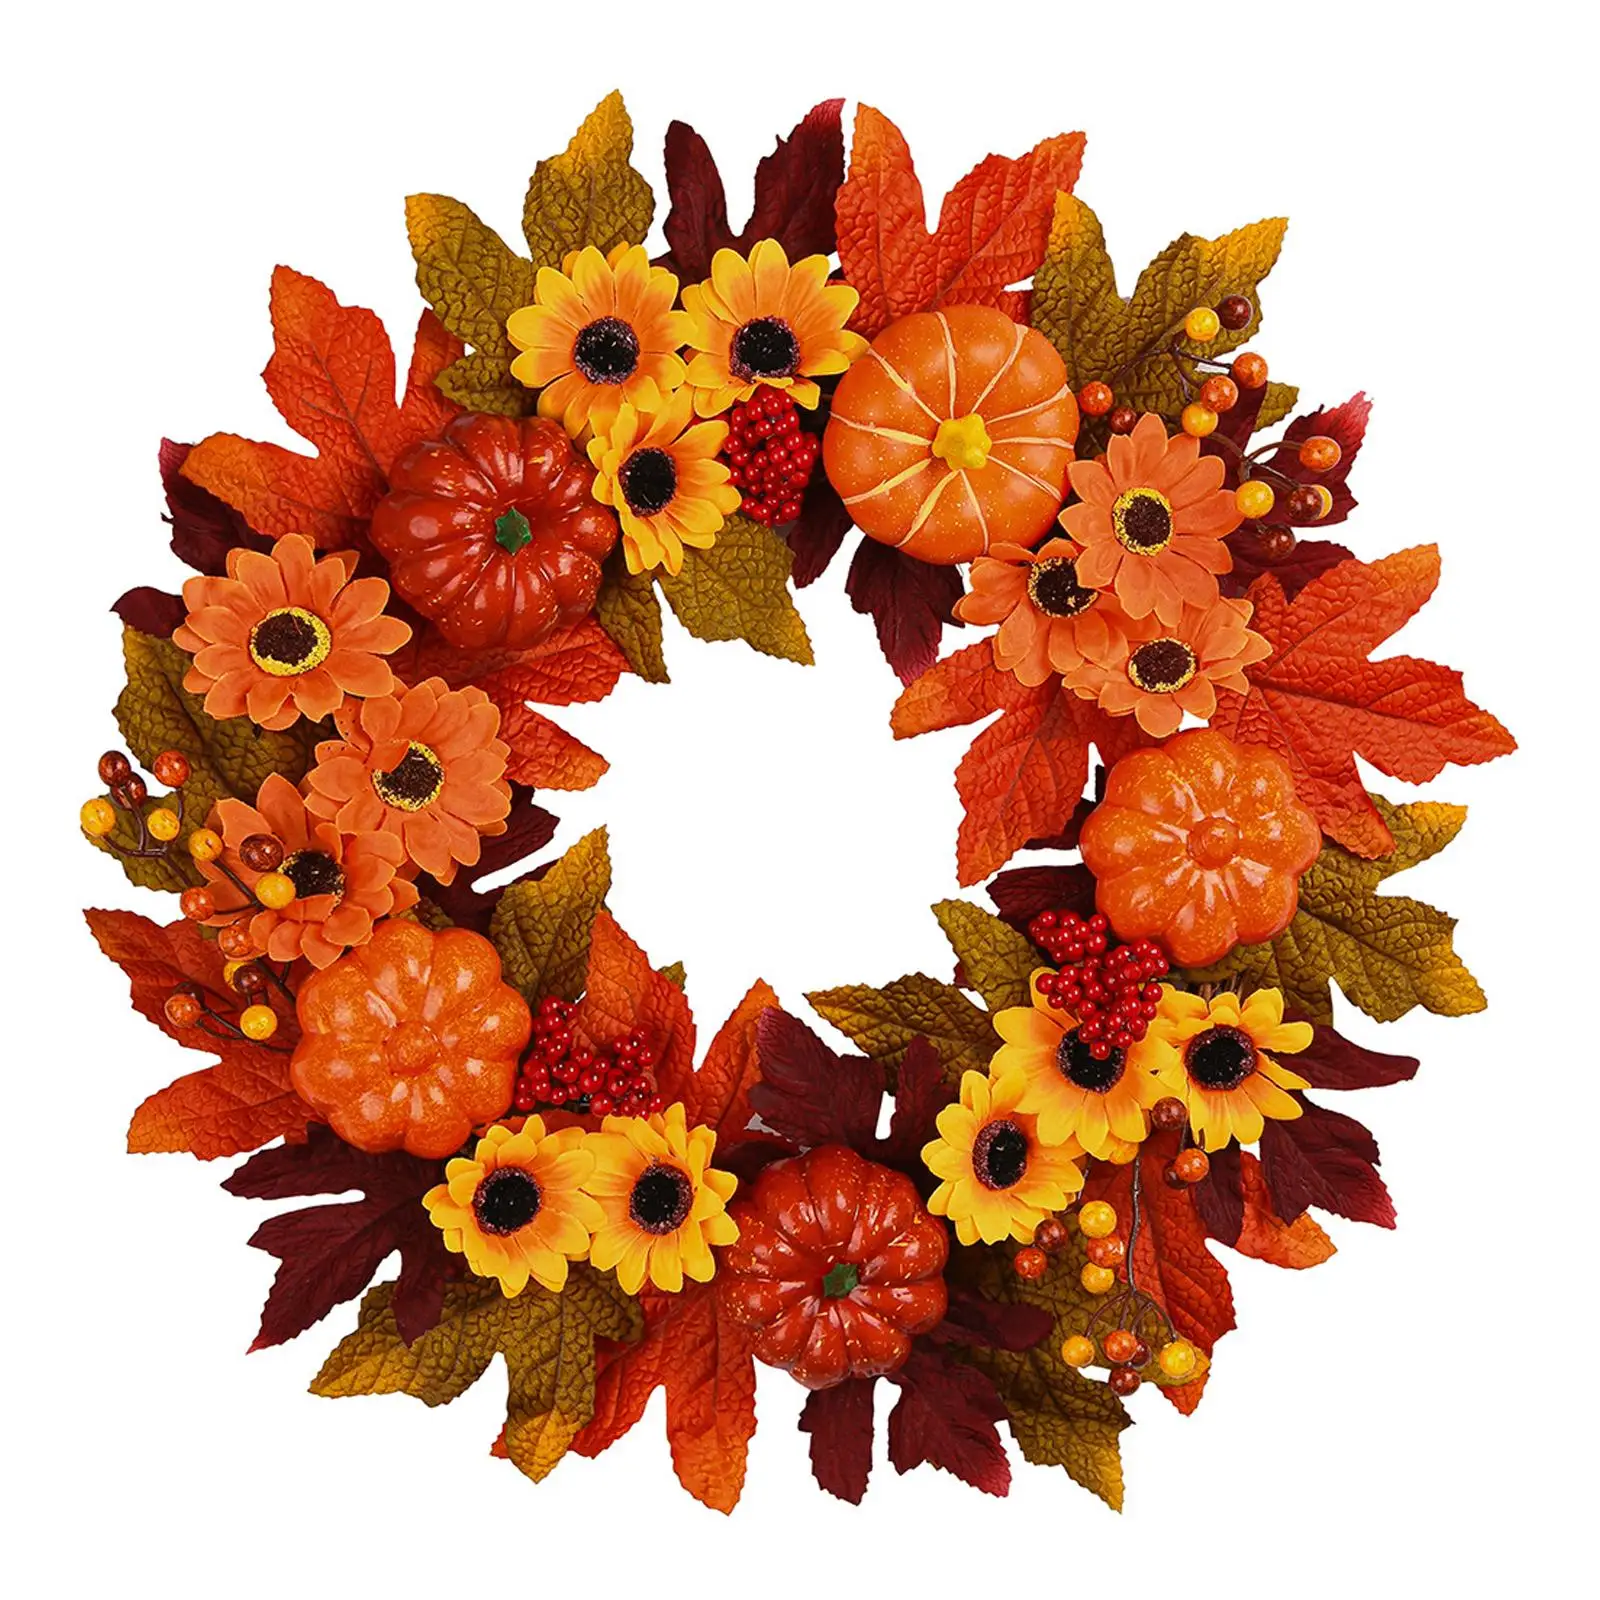 50cm Fall Wreath Harvest Front Door Hanger Artificial Garland Decorative for Autumn Thanksgiving Wall Table Indoor Outdoor